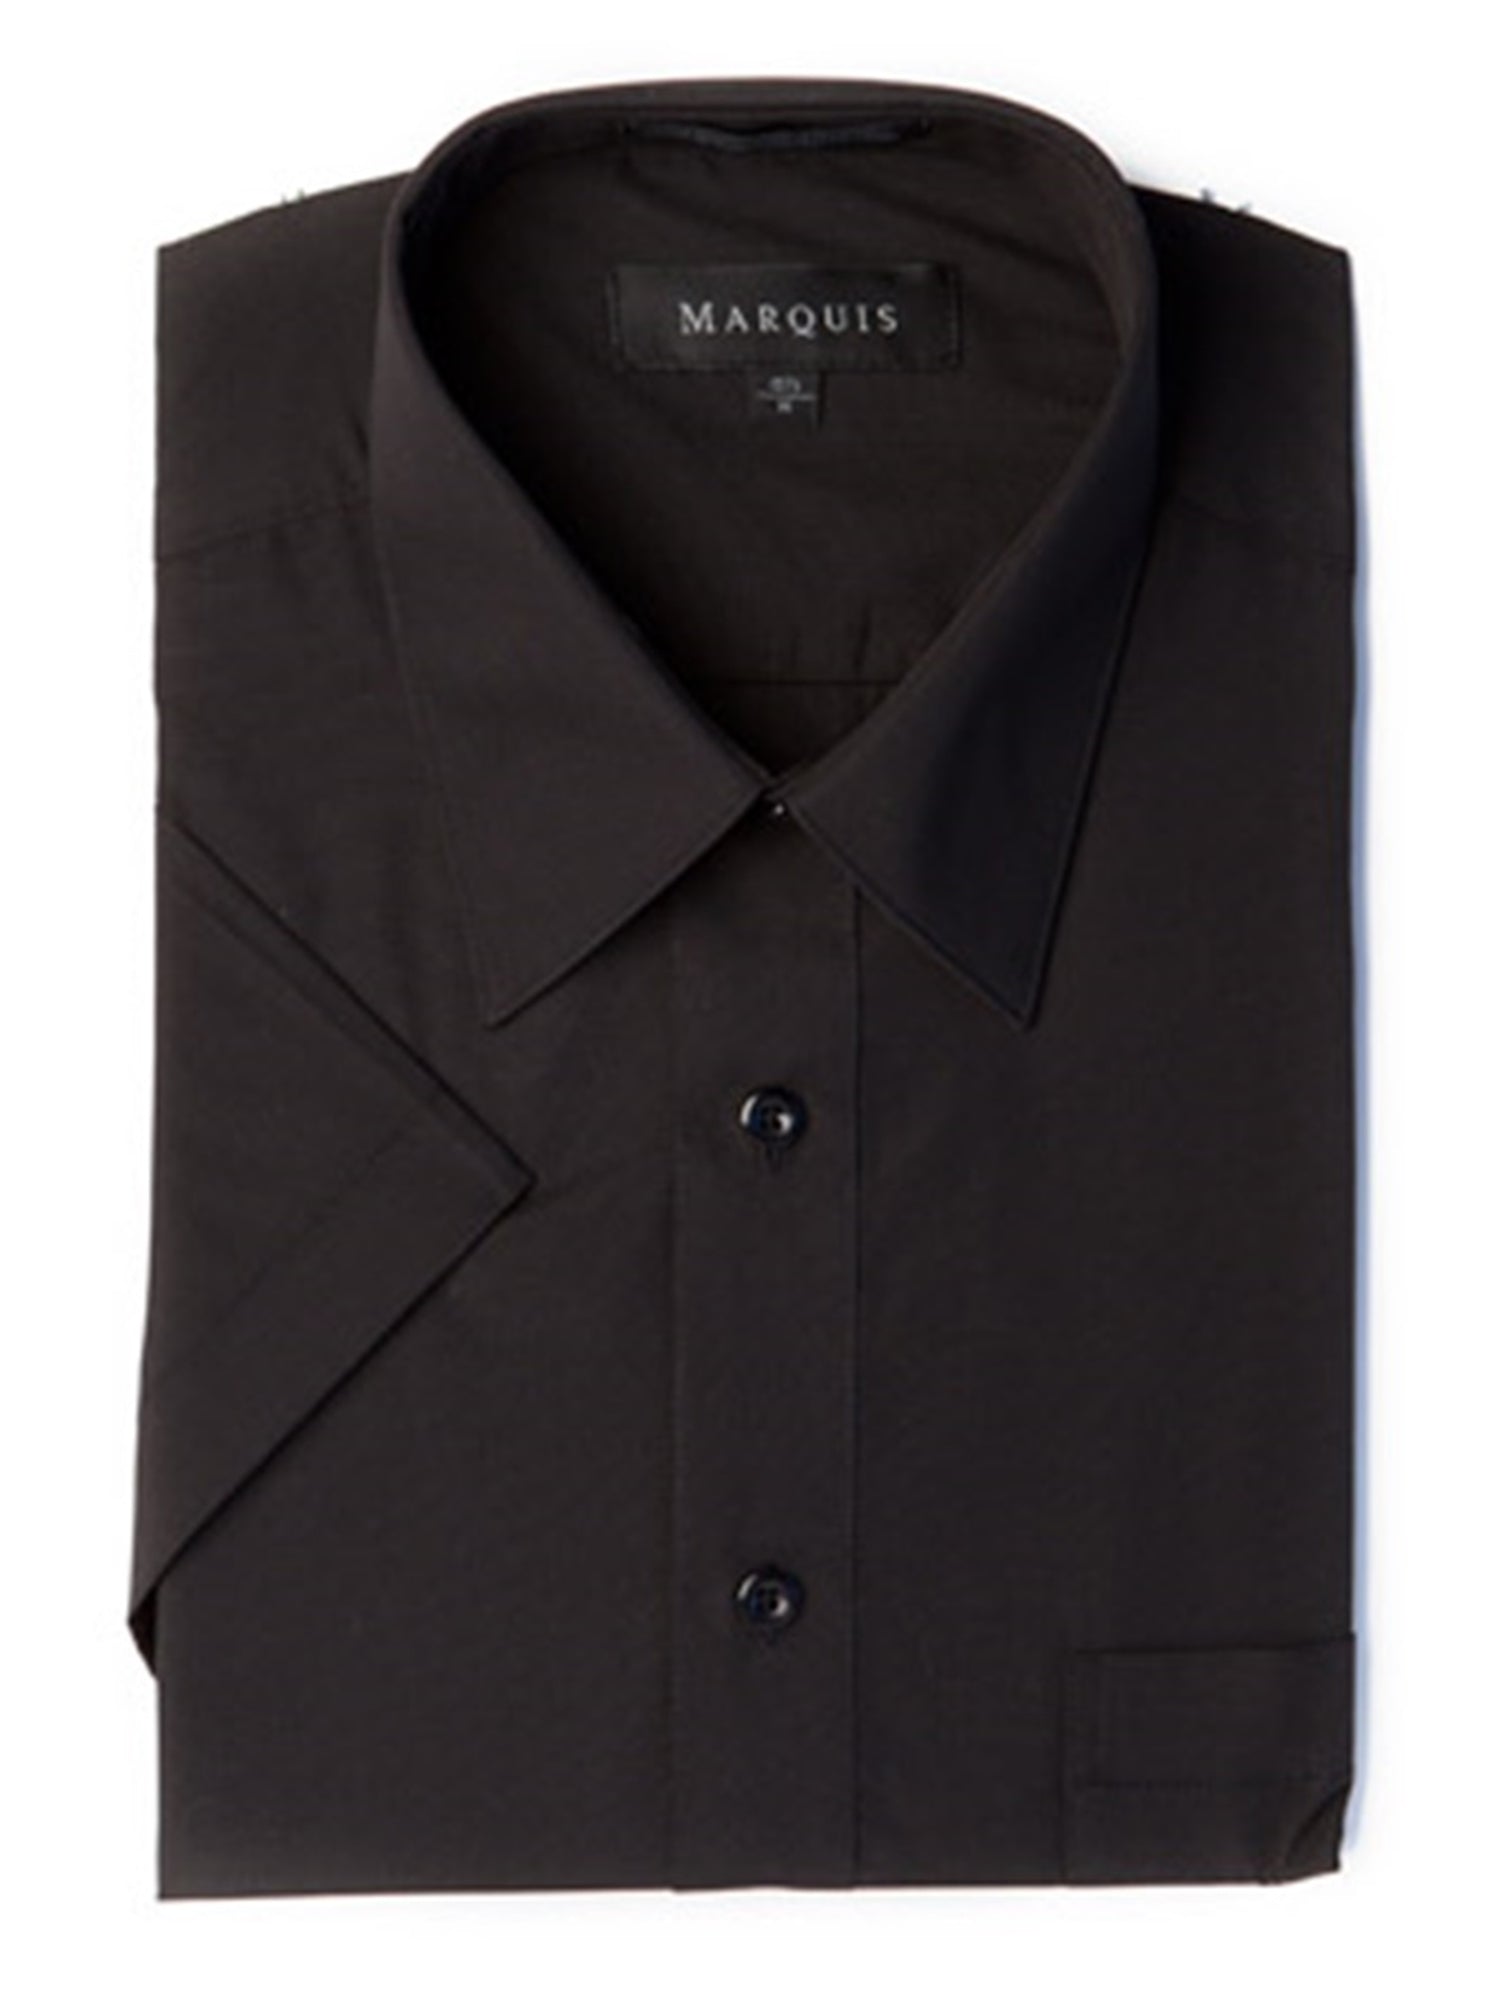 Marquis Men's Short Sleeve Regular Fit Dress Shirt - S To 4XL Men's Dress Shirts Marquis Black Small/14.5 